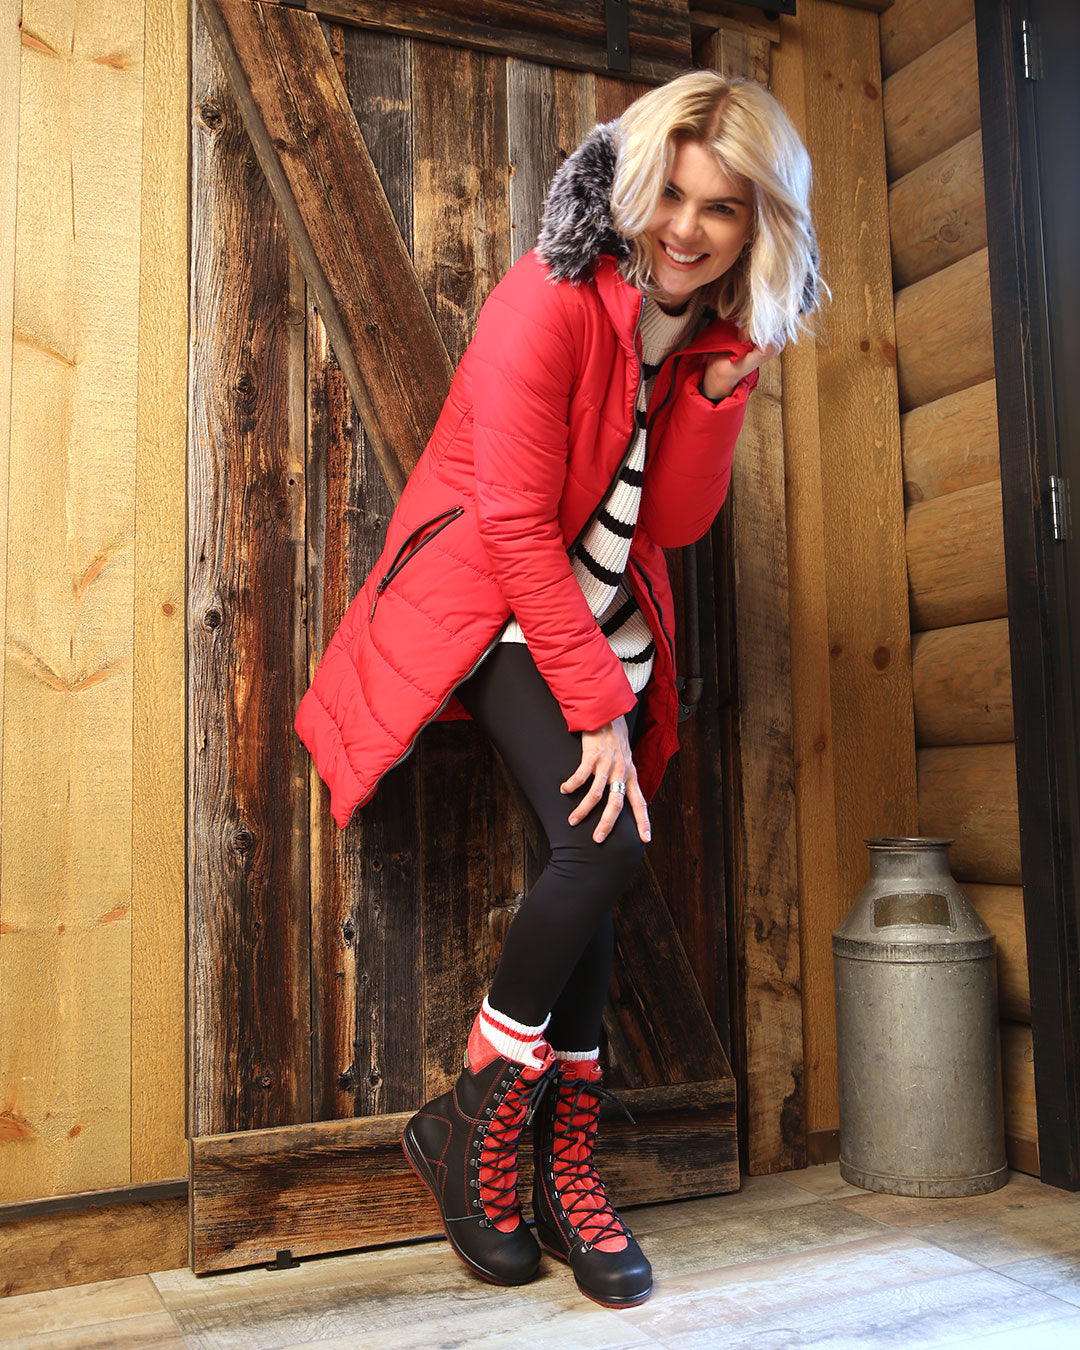 Banff winter boot for women - Olive 